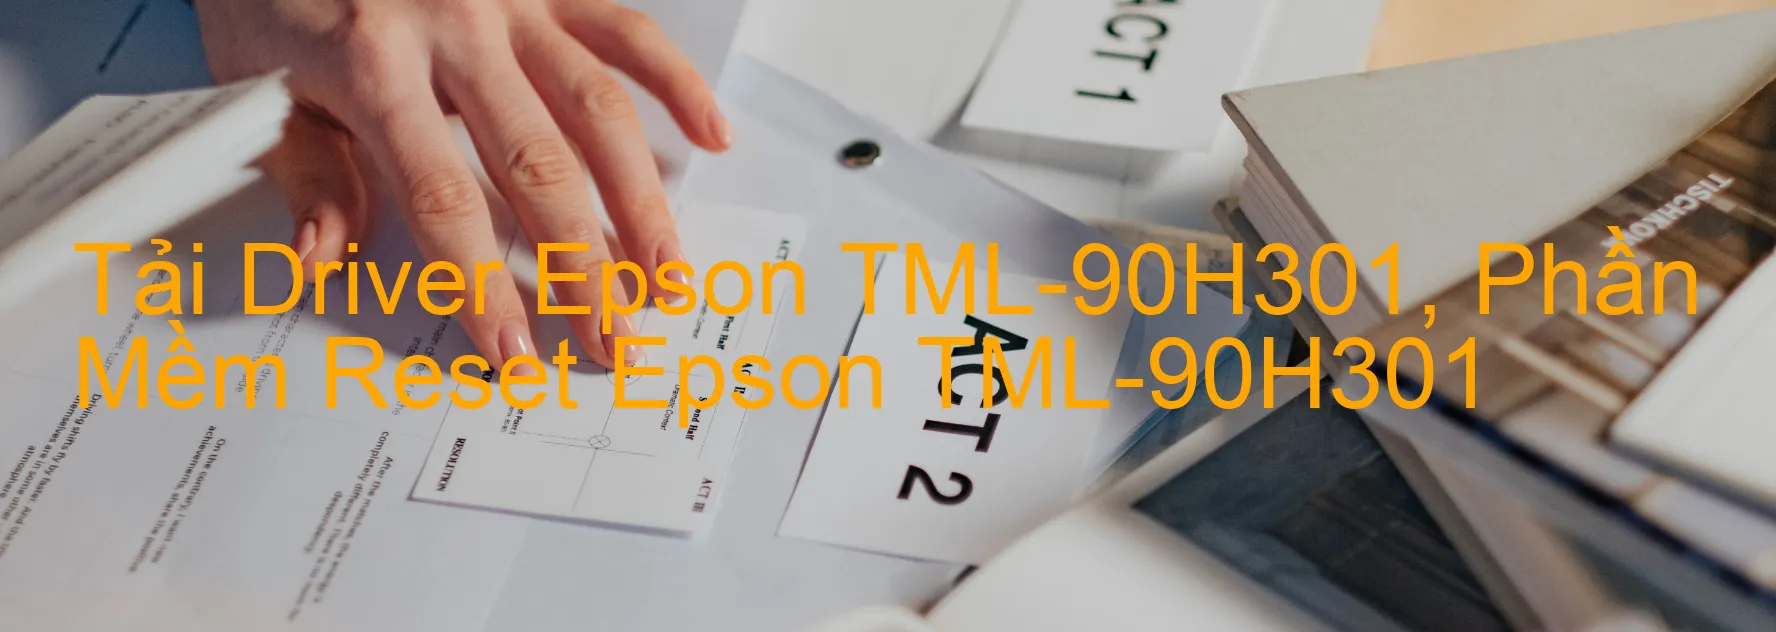 Driver Epson TML-90H301, Phần Mềm Reset Epson TML-90H301